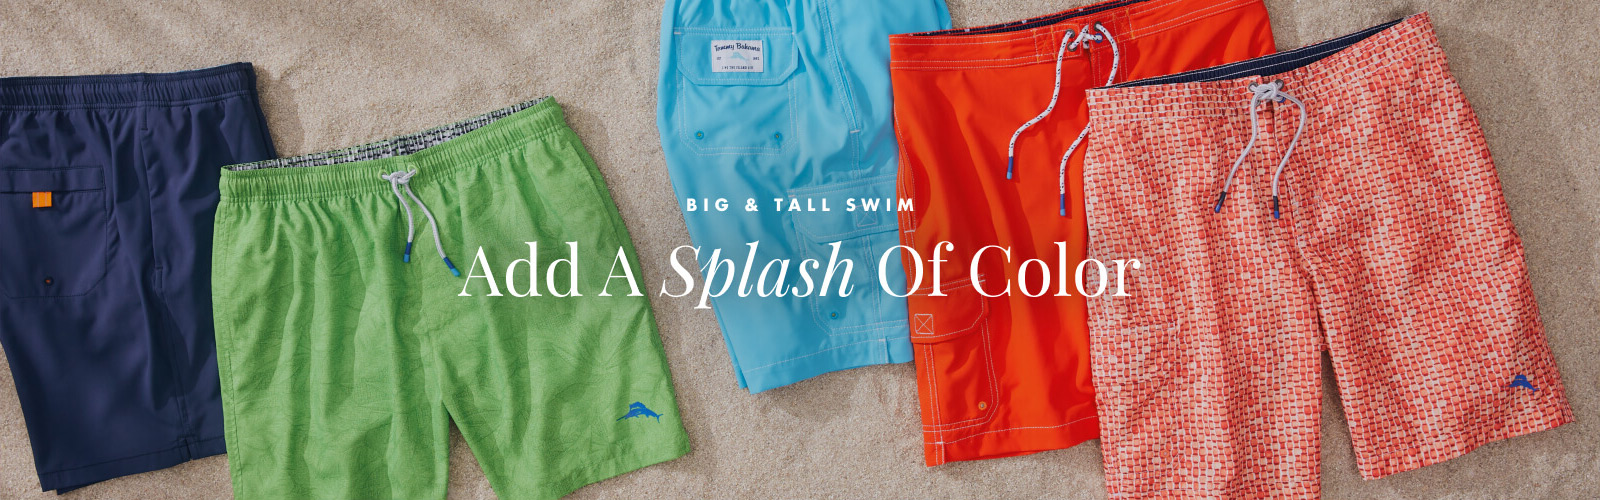 Big & Tall Swim Add A Splash Of Color